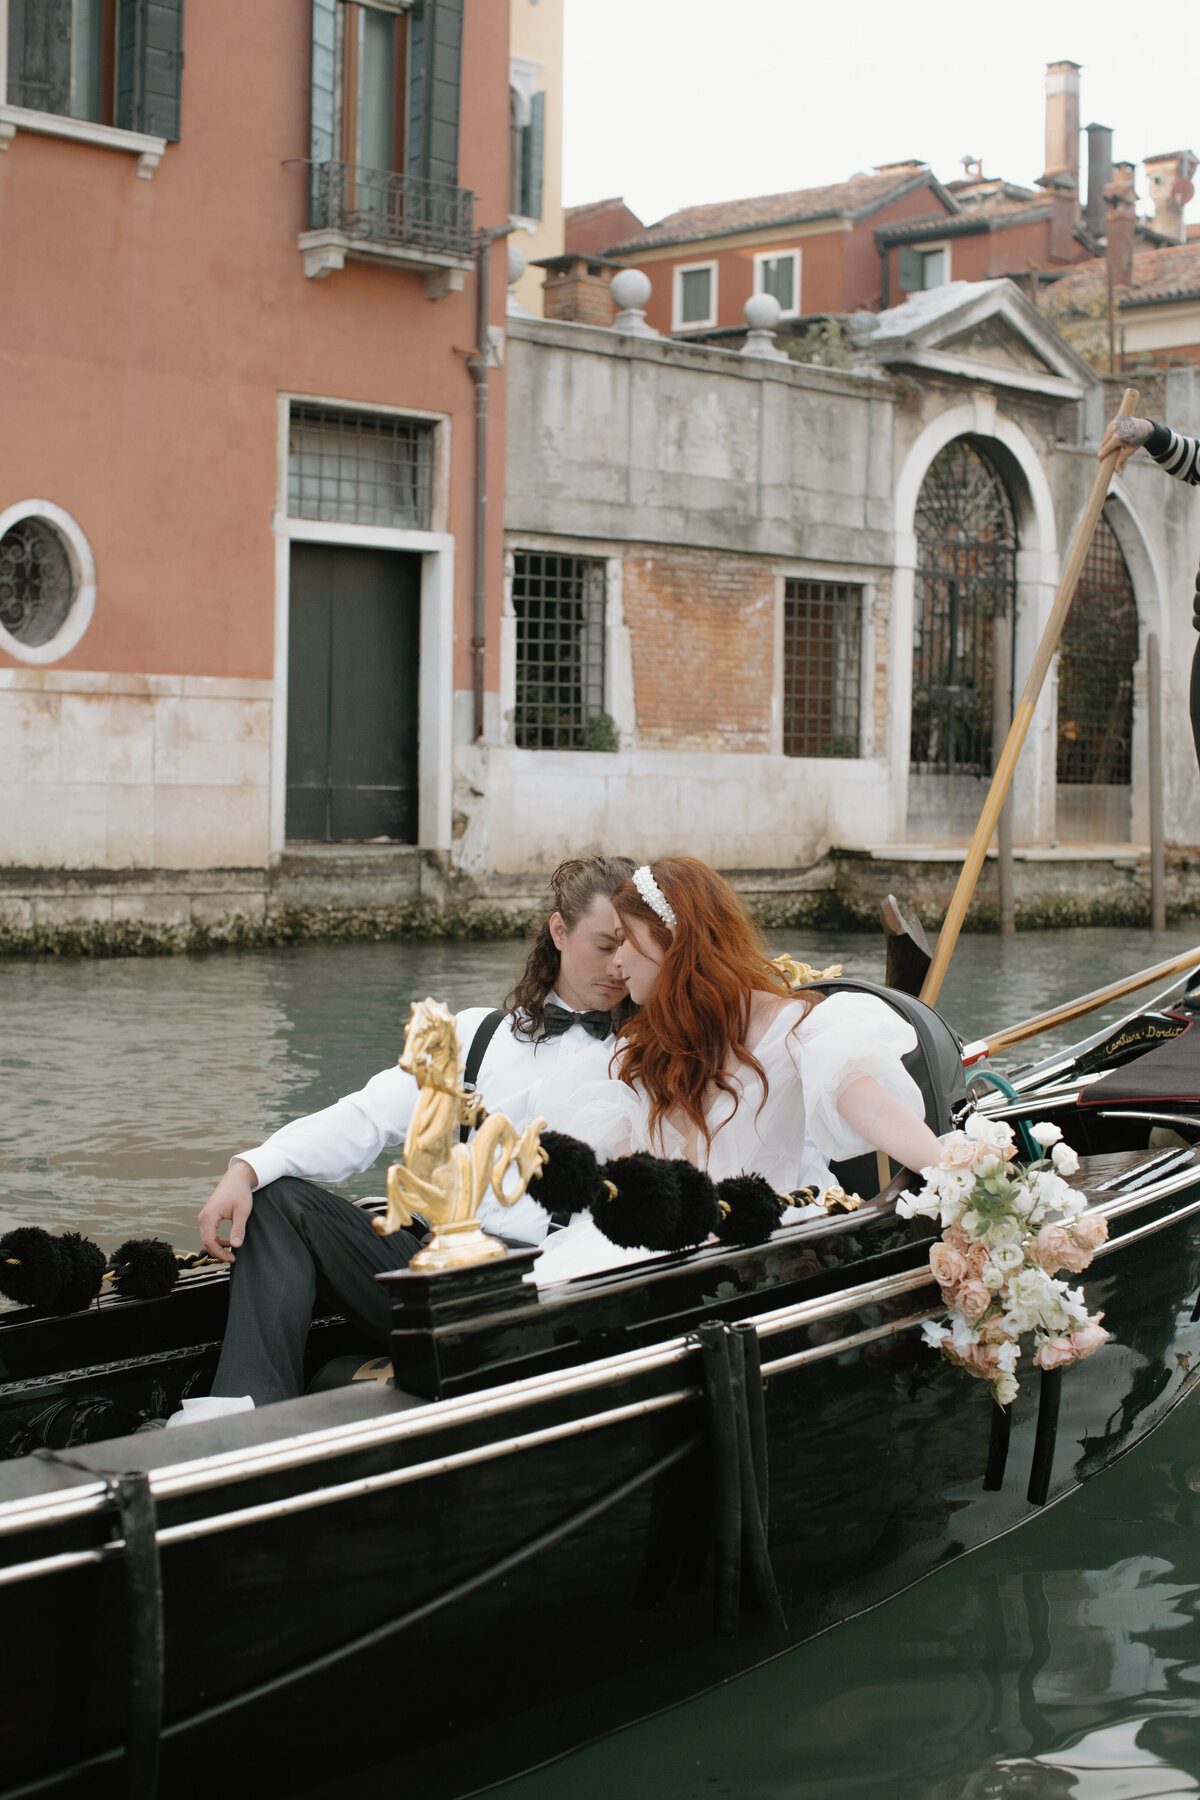 -Documentary-Style-Editorial-Vogue-gondola-Italy-Destination-Wedding-Leah-Gunn-PhotographyDocumentary-Style-Editorial-Vogue-gondola-Italy-Destination-Wedding-Leah-Gunn-Photography-72